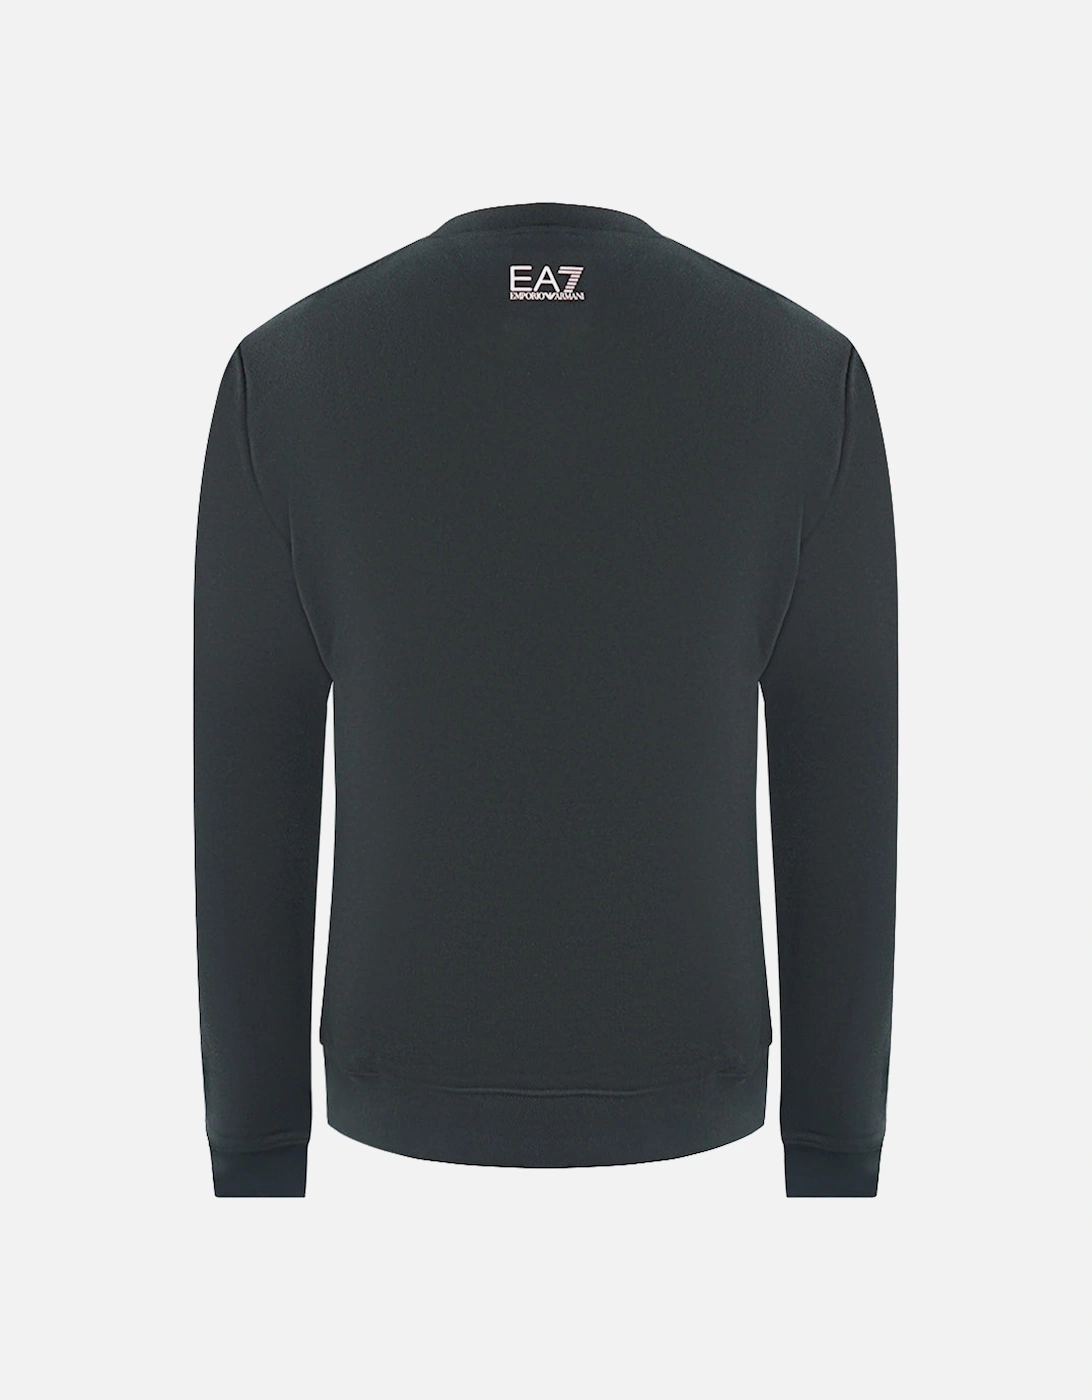 Large Brand Logo Black Sweatershirt